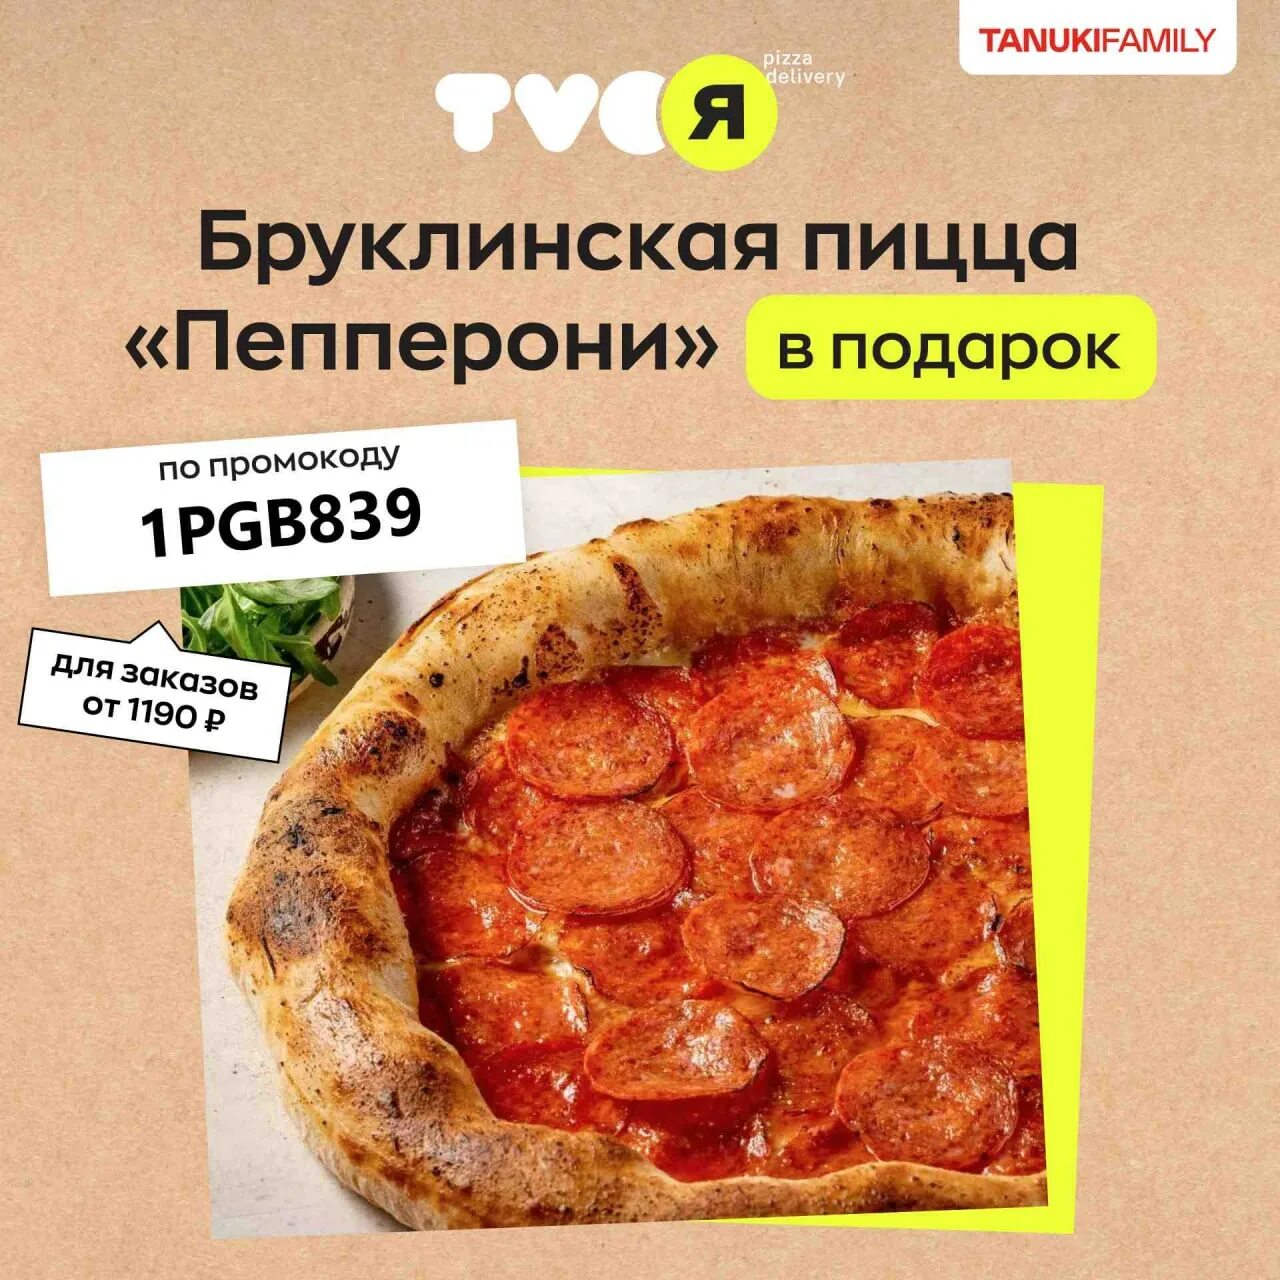 технологические карты на пиццу пепперони фото 55